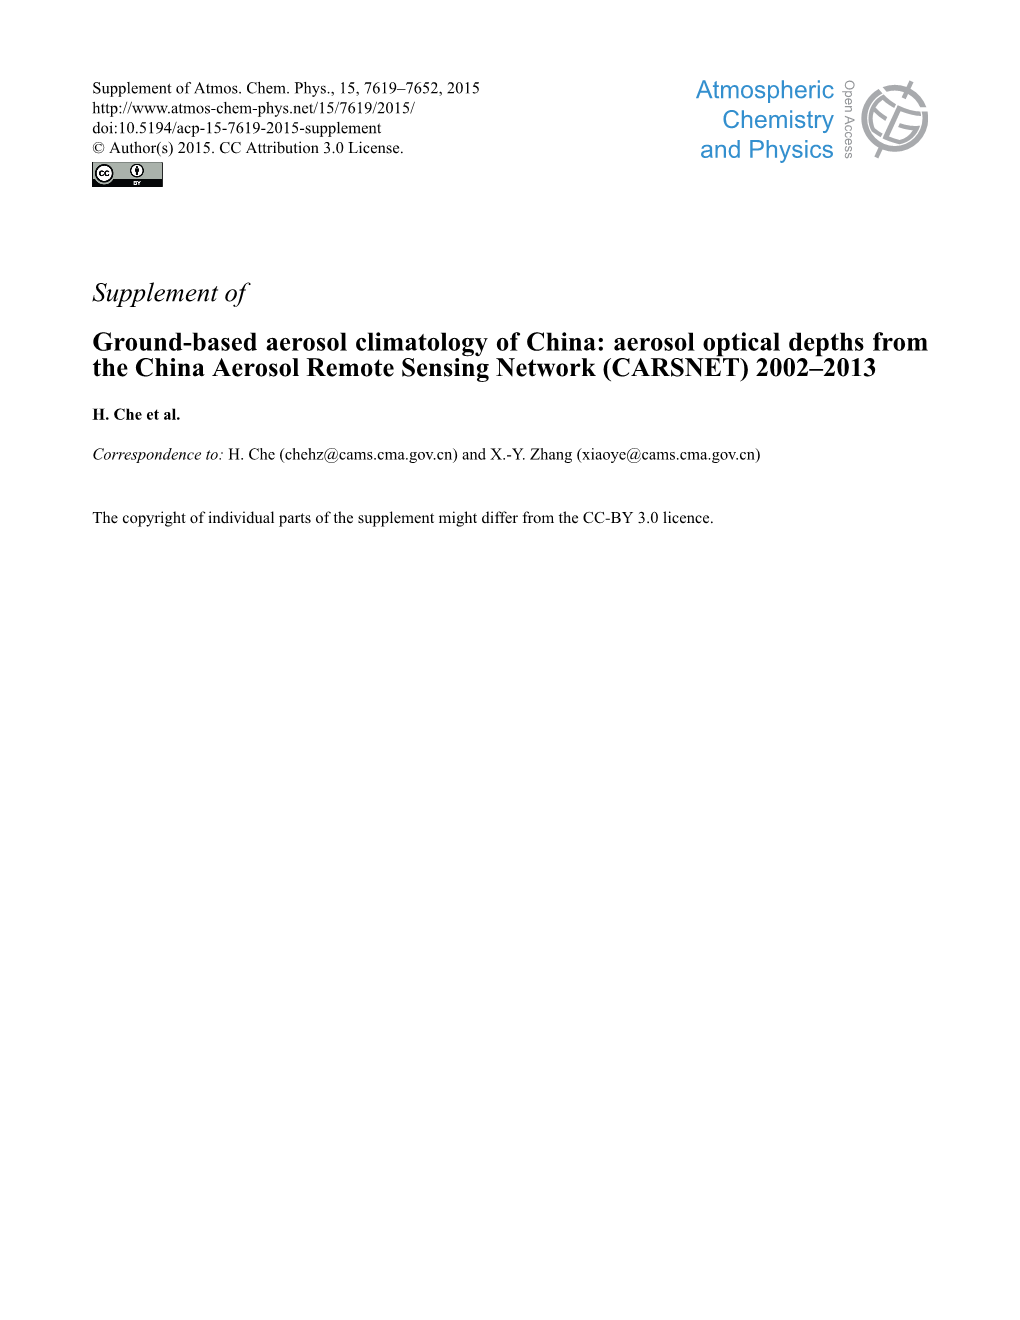 Supplement of Ground-Based Aerosol Climatology of China: Aerosol Optical Depths from the China Aerosol Remote Sensing Network (CARSNET) 2002–2013